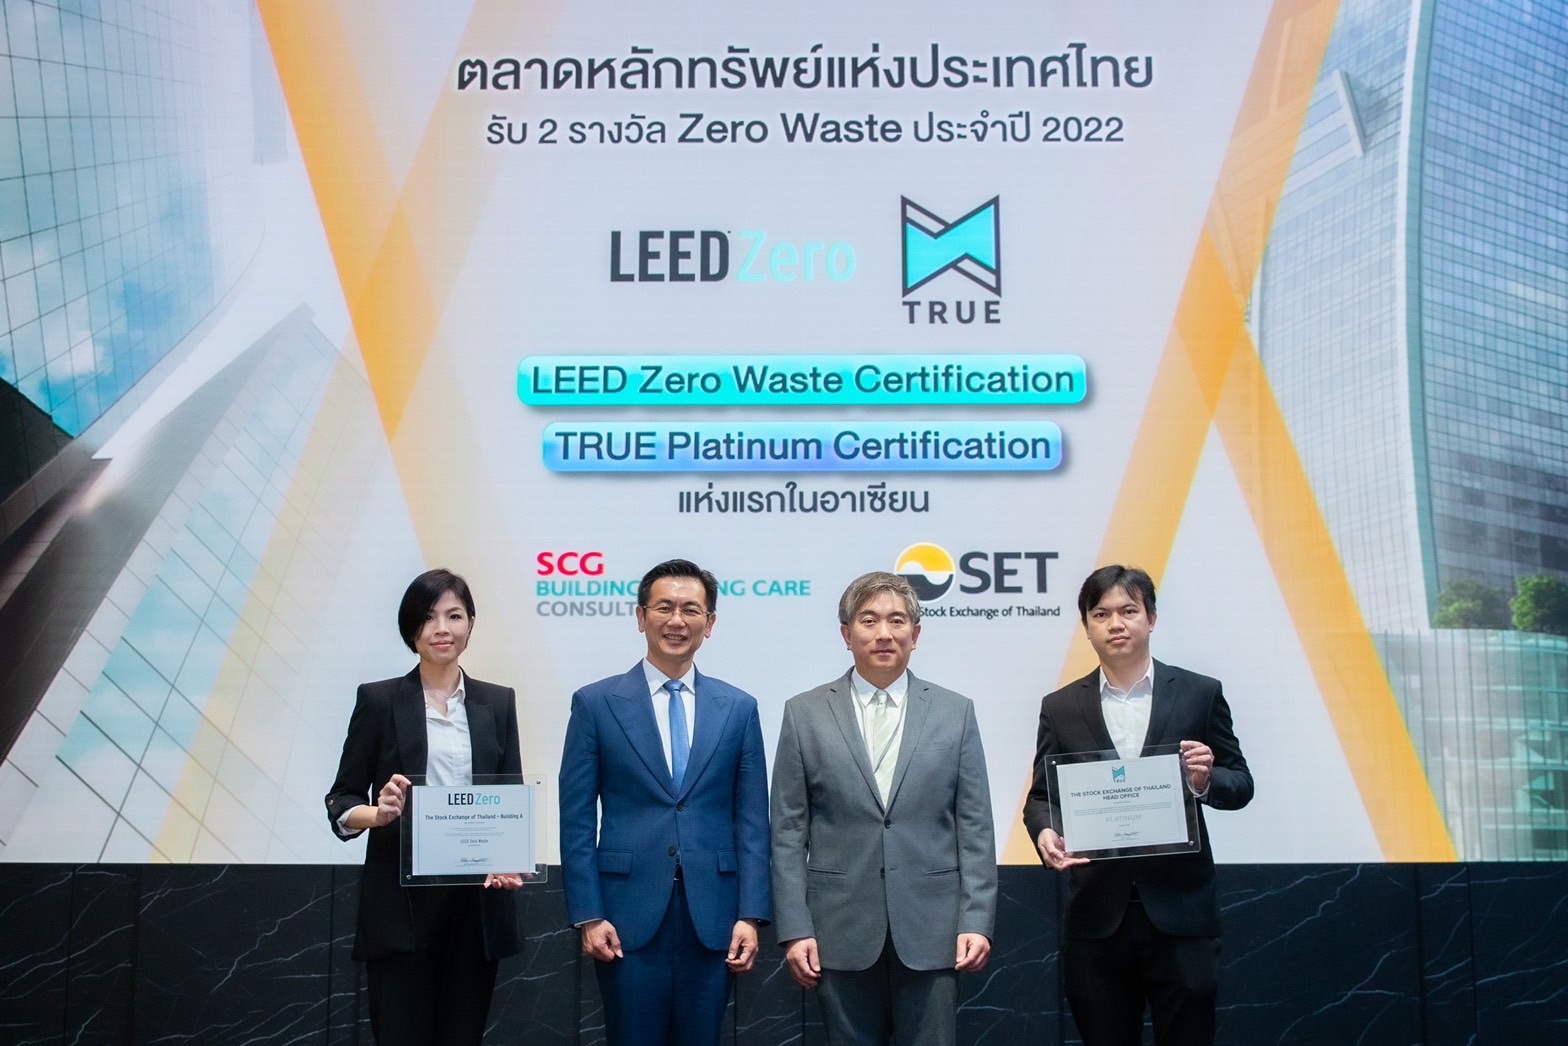 SCG ร่วมมอบรางวัลแก่ตลาดหลักทรัพย์ฯ ในการรับรองมาตรฐานอาคาร “LEED Zero Waste” และ “TRUE Certification ในระดับ Platinum” เป็นแห่งแรกในอาเซียน